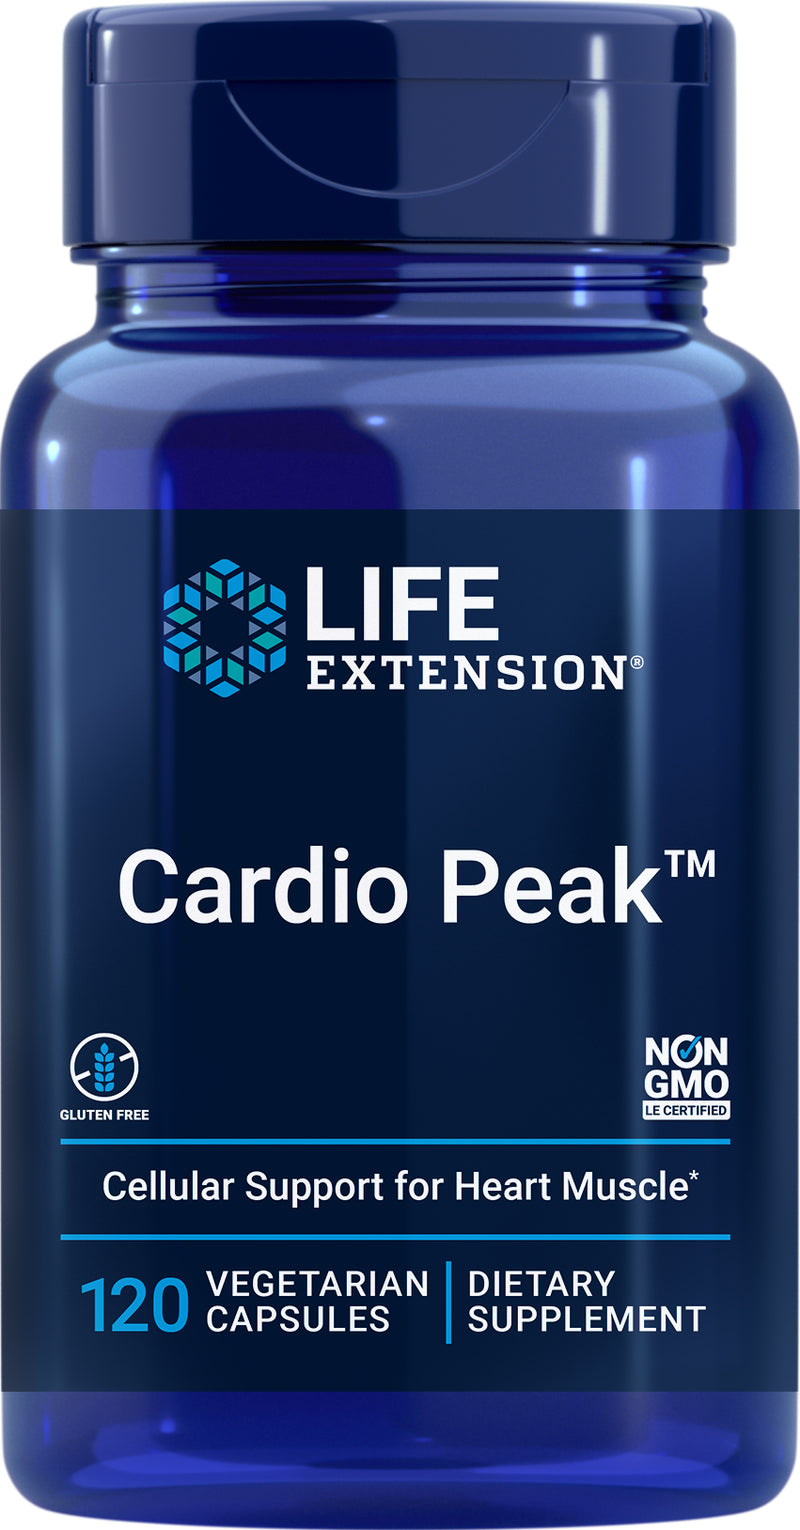 Cardio Peak™ 120 vegetarian capsules by Life Extension